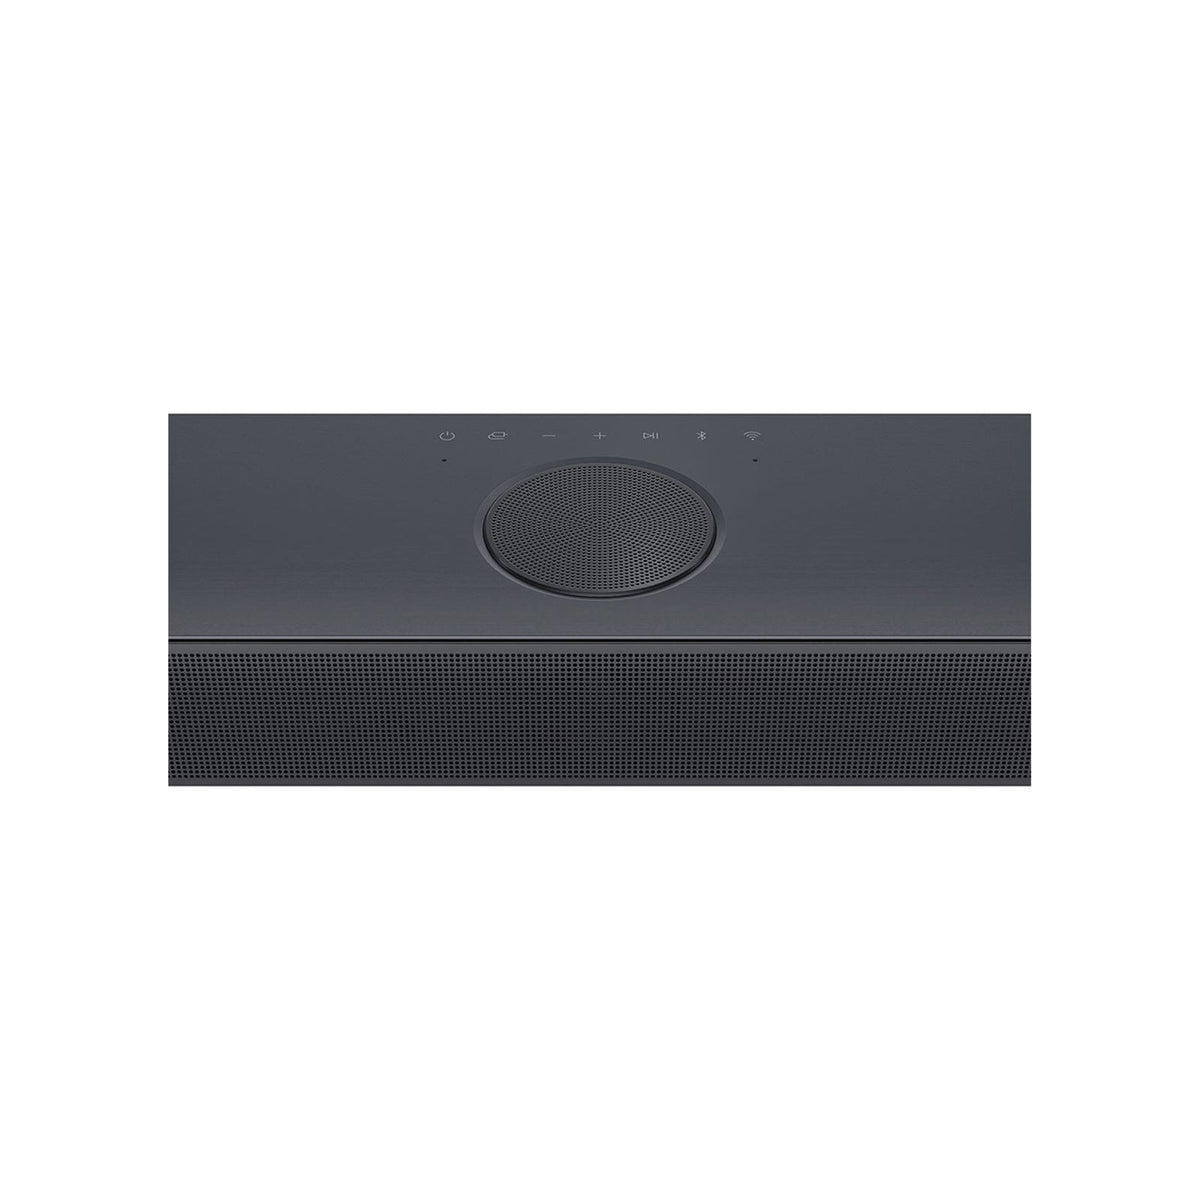 LG 400W 3.1.3ch Bluetooth Soundbar with Wireless Subwoofer - Black | USC9S.DGBRLLK from LG - DID Electrical